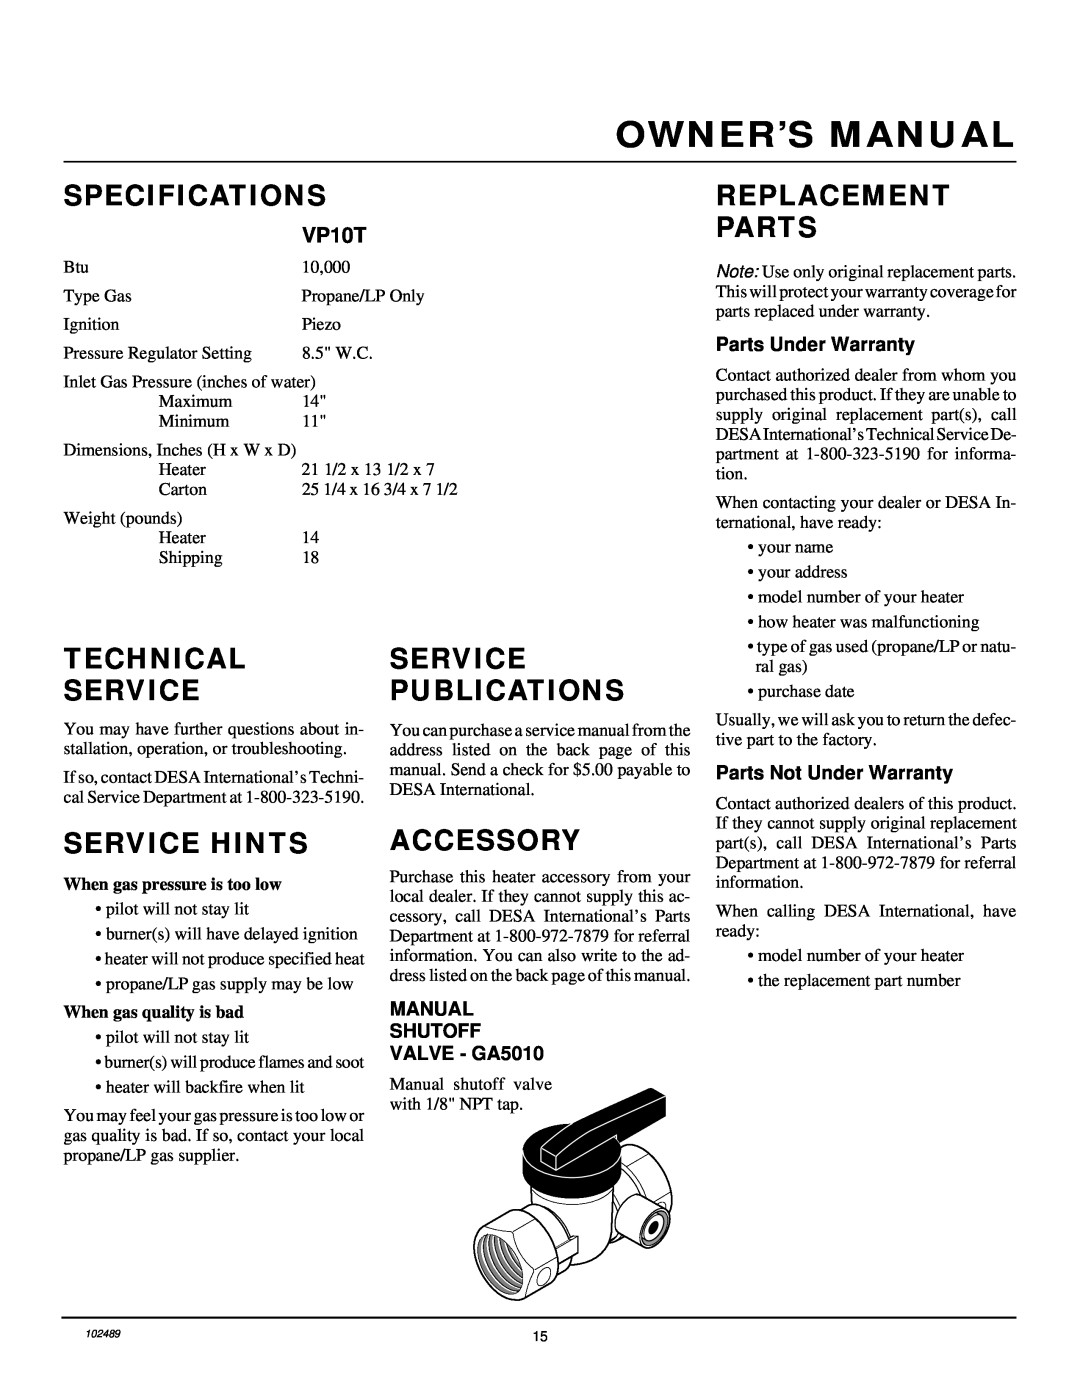 Desa VP10T Specifications, Technical, Publications, Replacement Parts, Service Hints, Accessory, Parts Under Warranty 